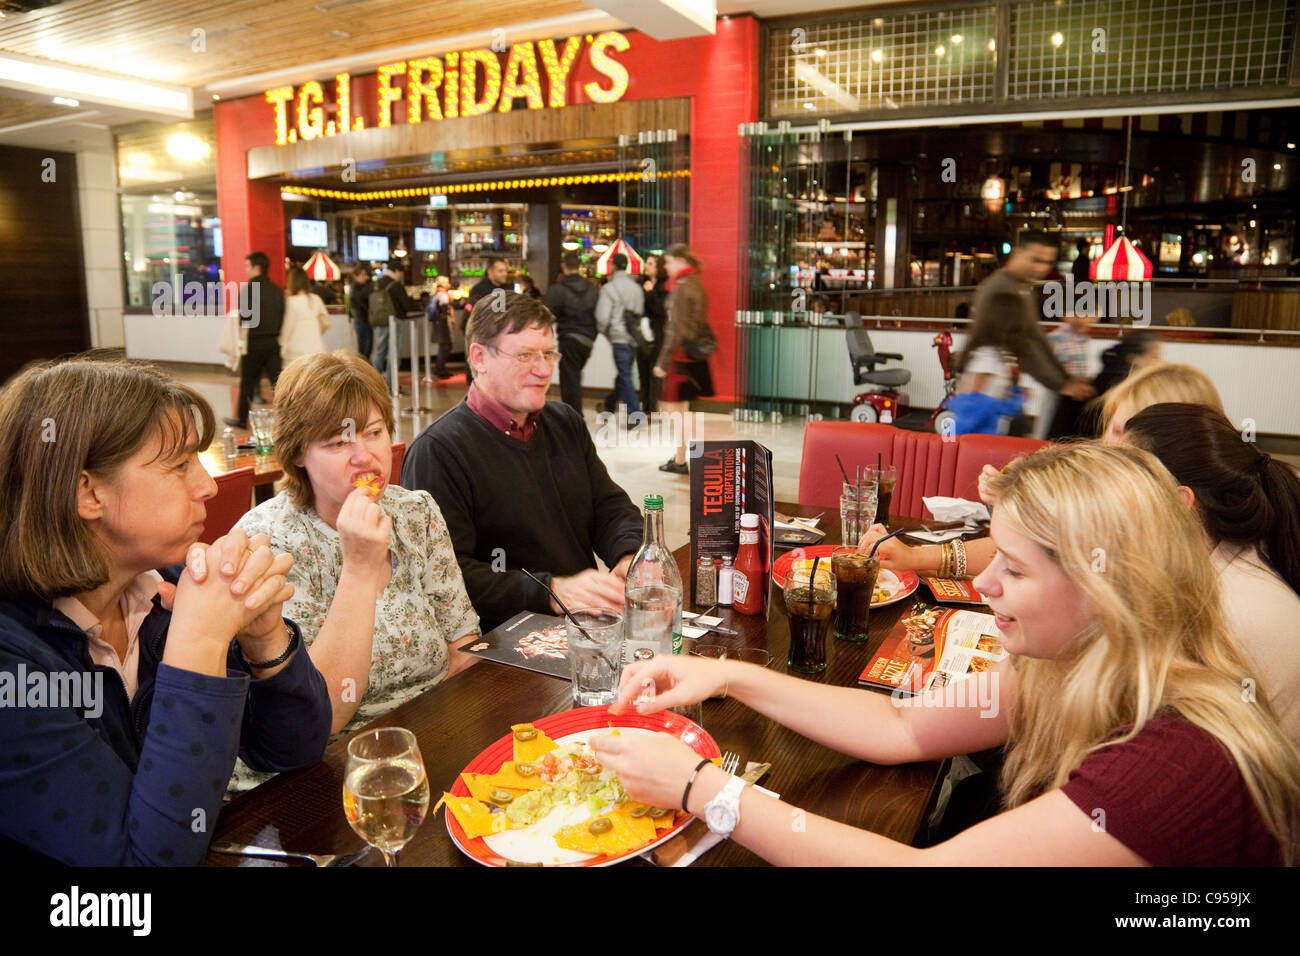 A family eating at TGI Fridays restaurant, Westfield shopping mall centre, Stratford, London UK Stock Photo